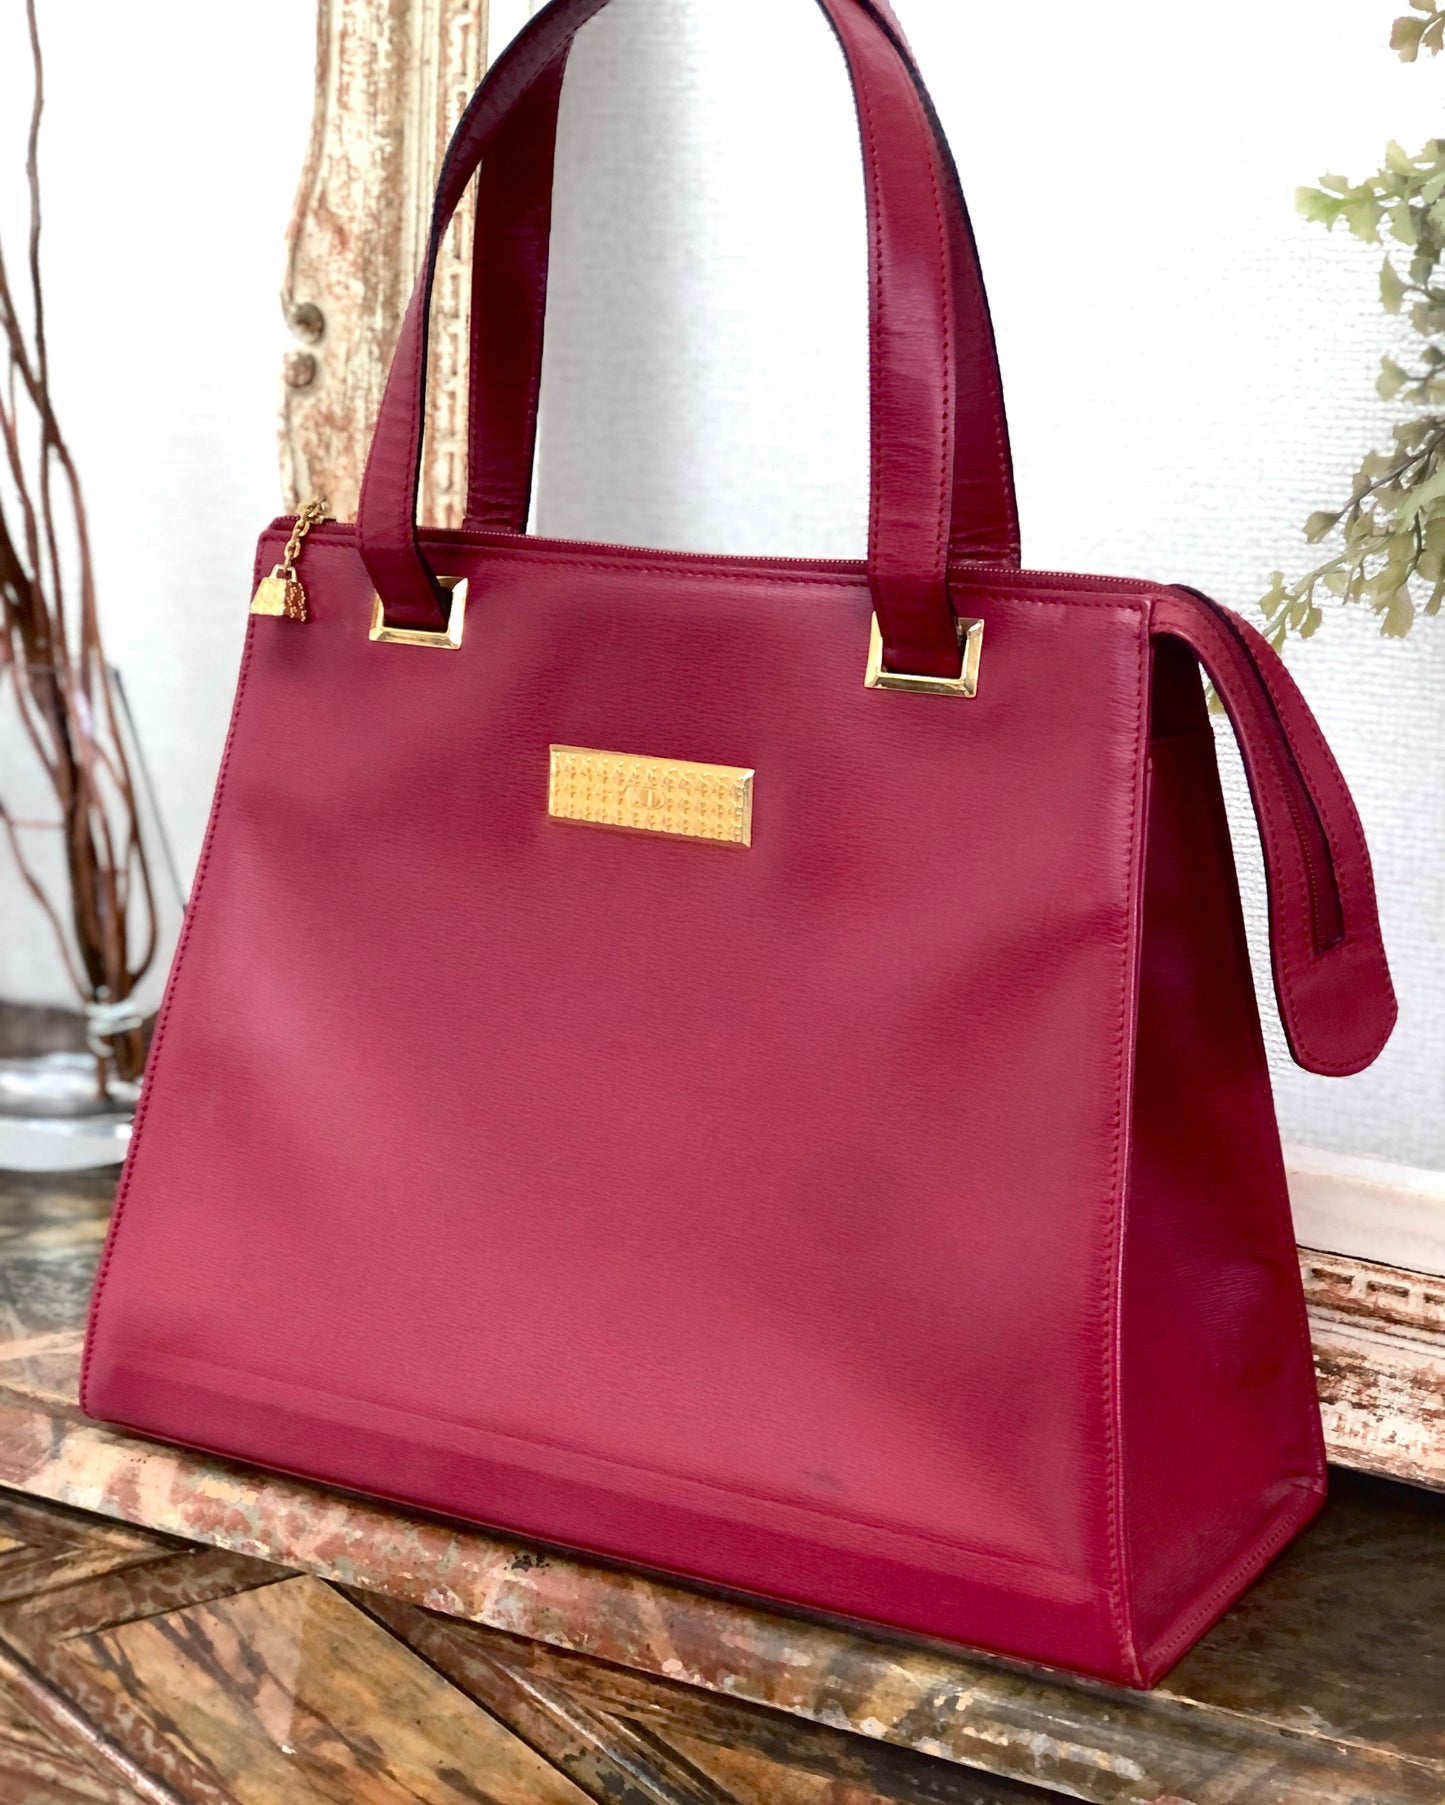 Christian Dior Leather Handbag Red gxtirp